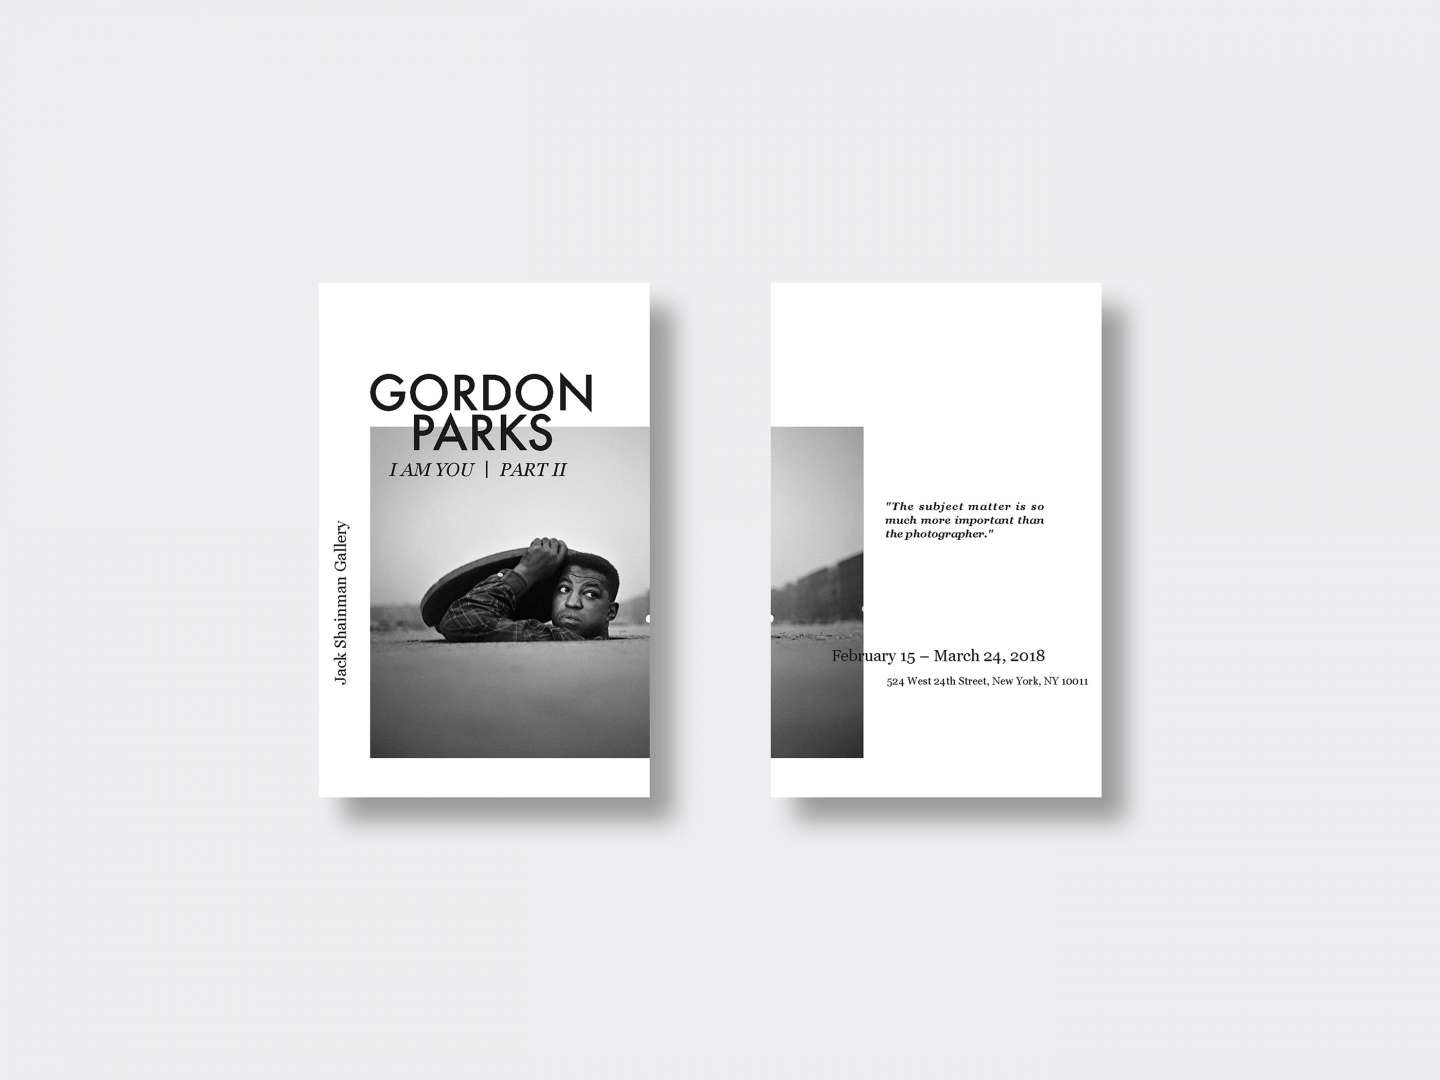 Gordon Parks Gallery Postcards